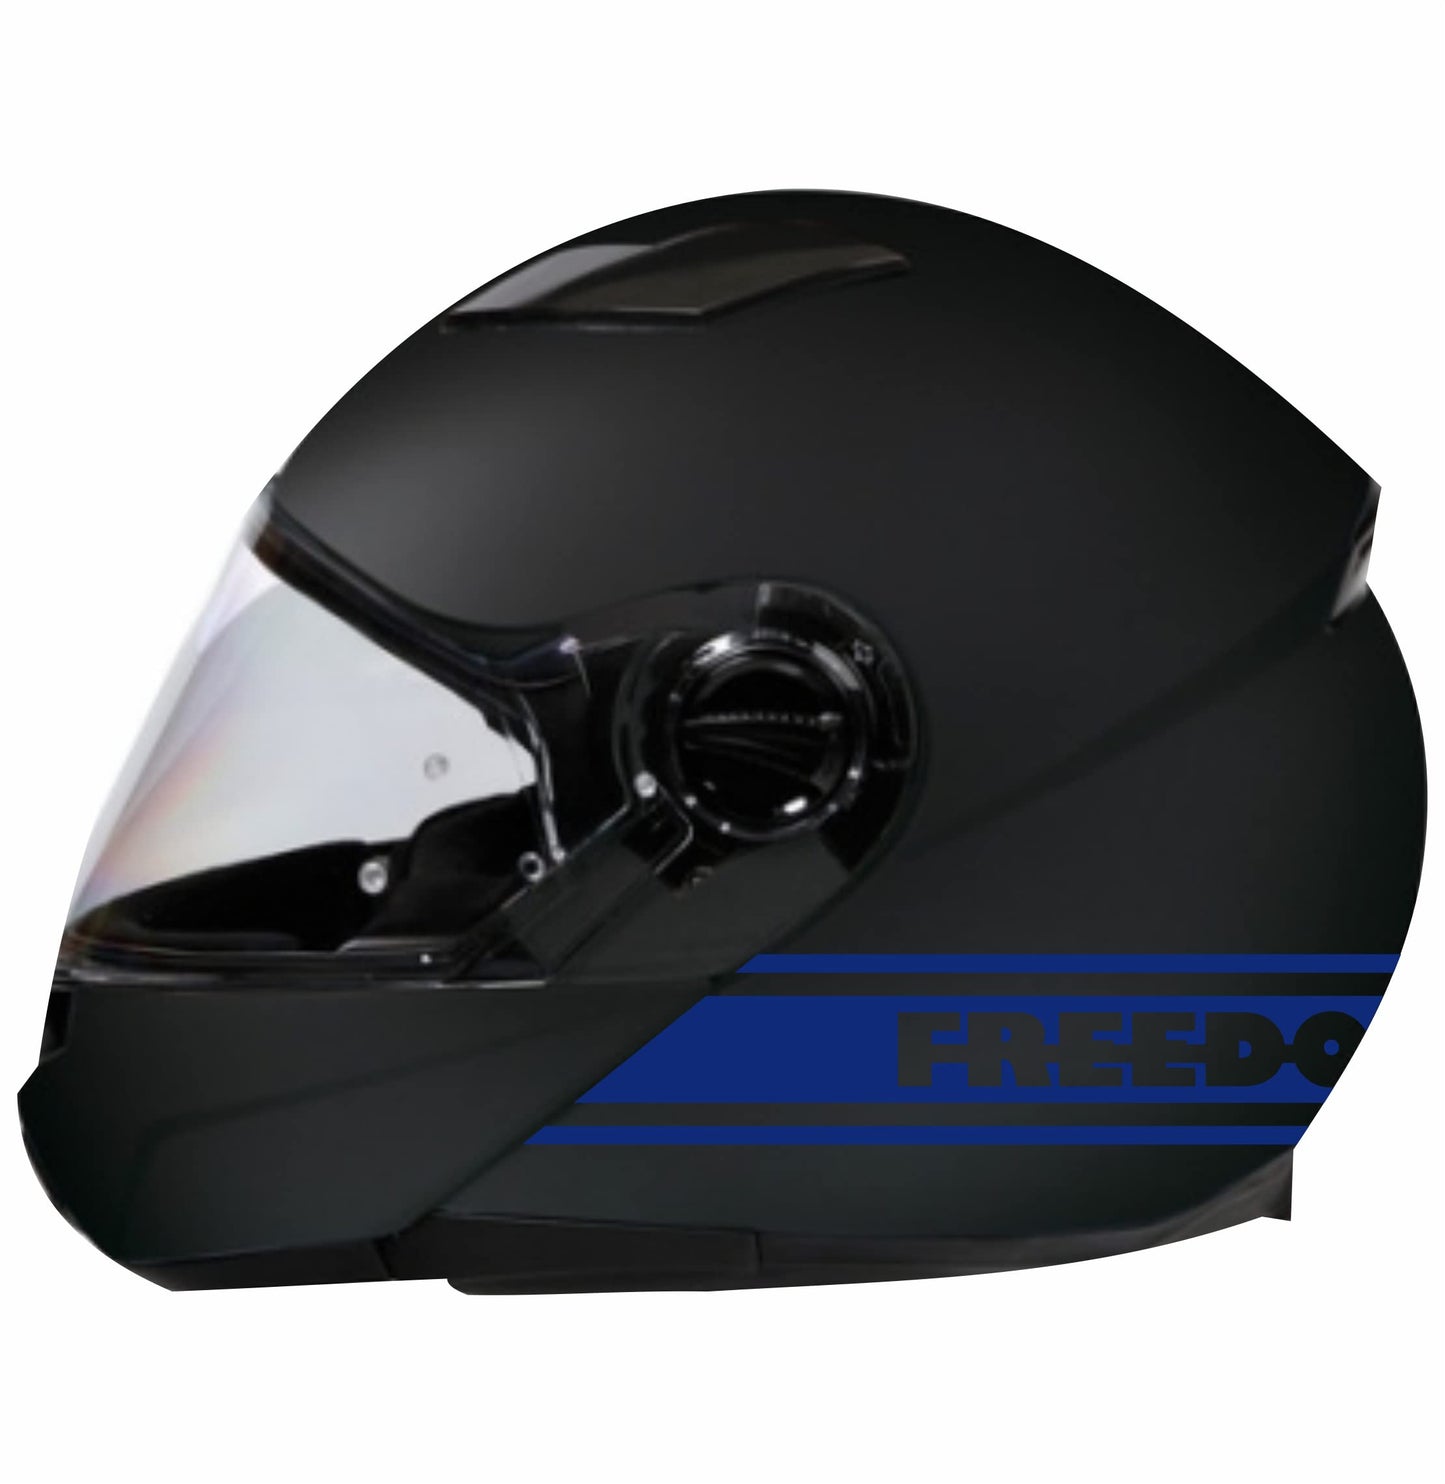 DualColorStampe Adesivi per casco FREEDOM moto motorino Helmet universale Stripes Strisce Design sportivo stickers COD.C0049 a €12.99 solo da DualColorStampe